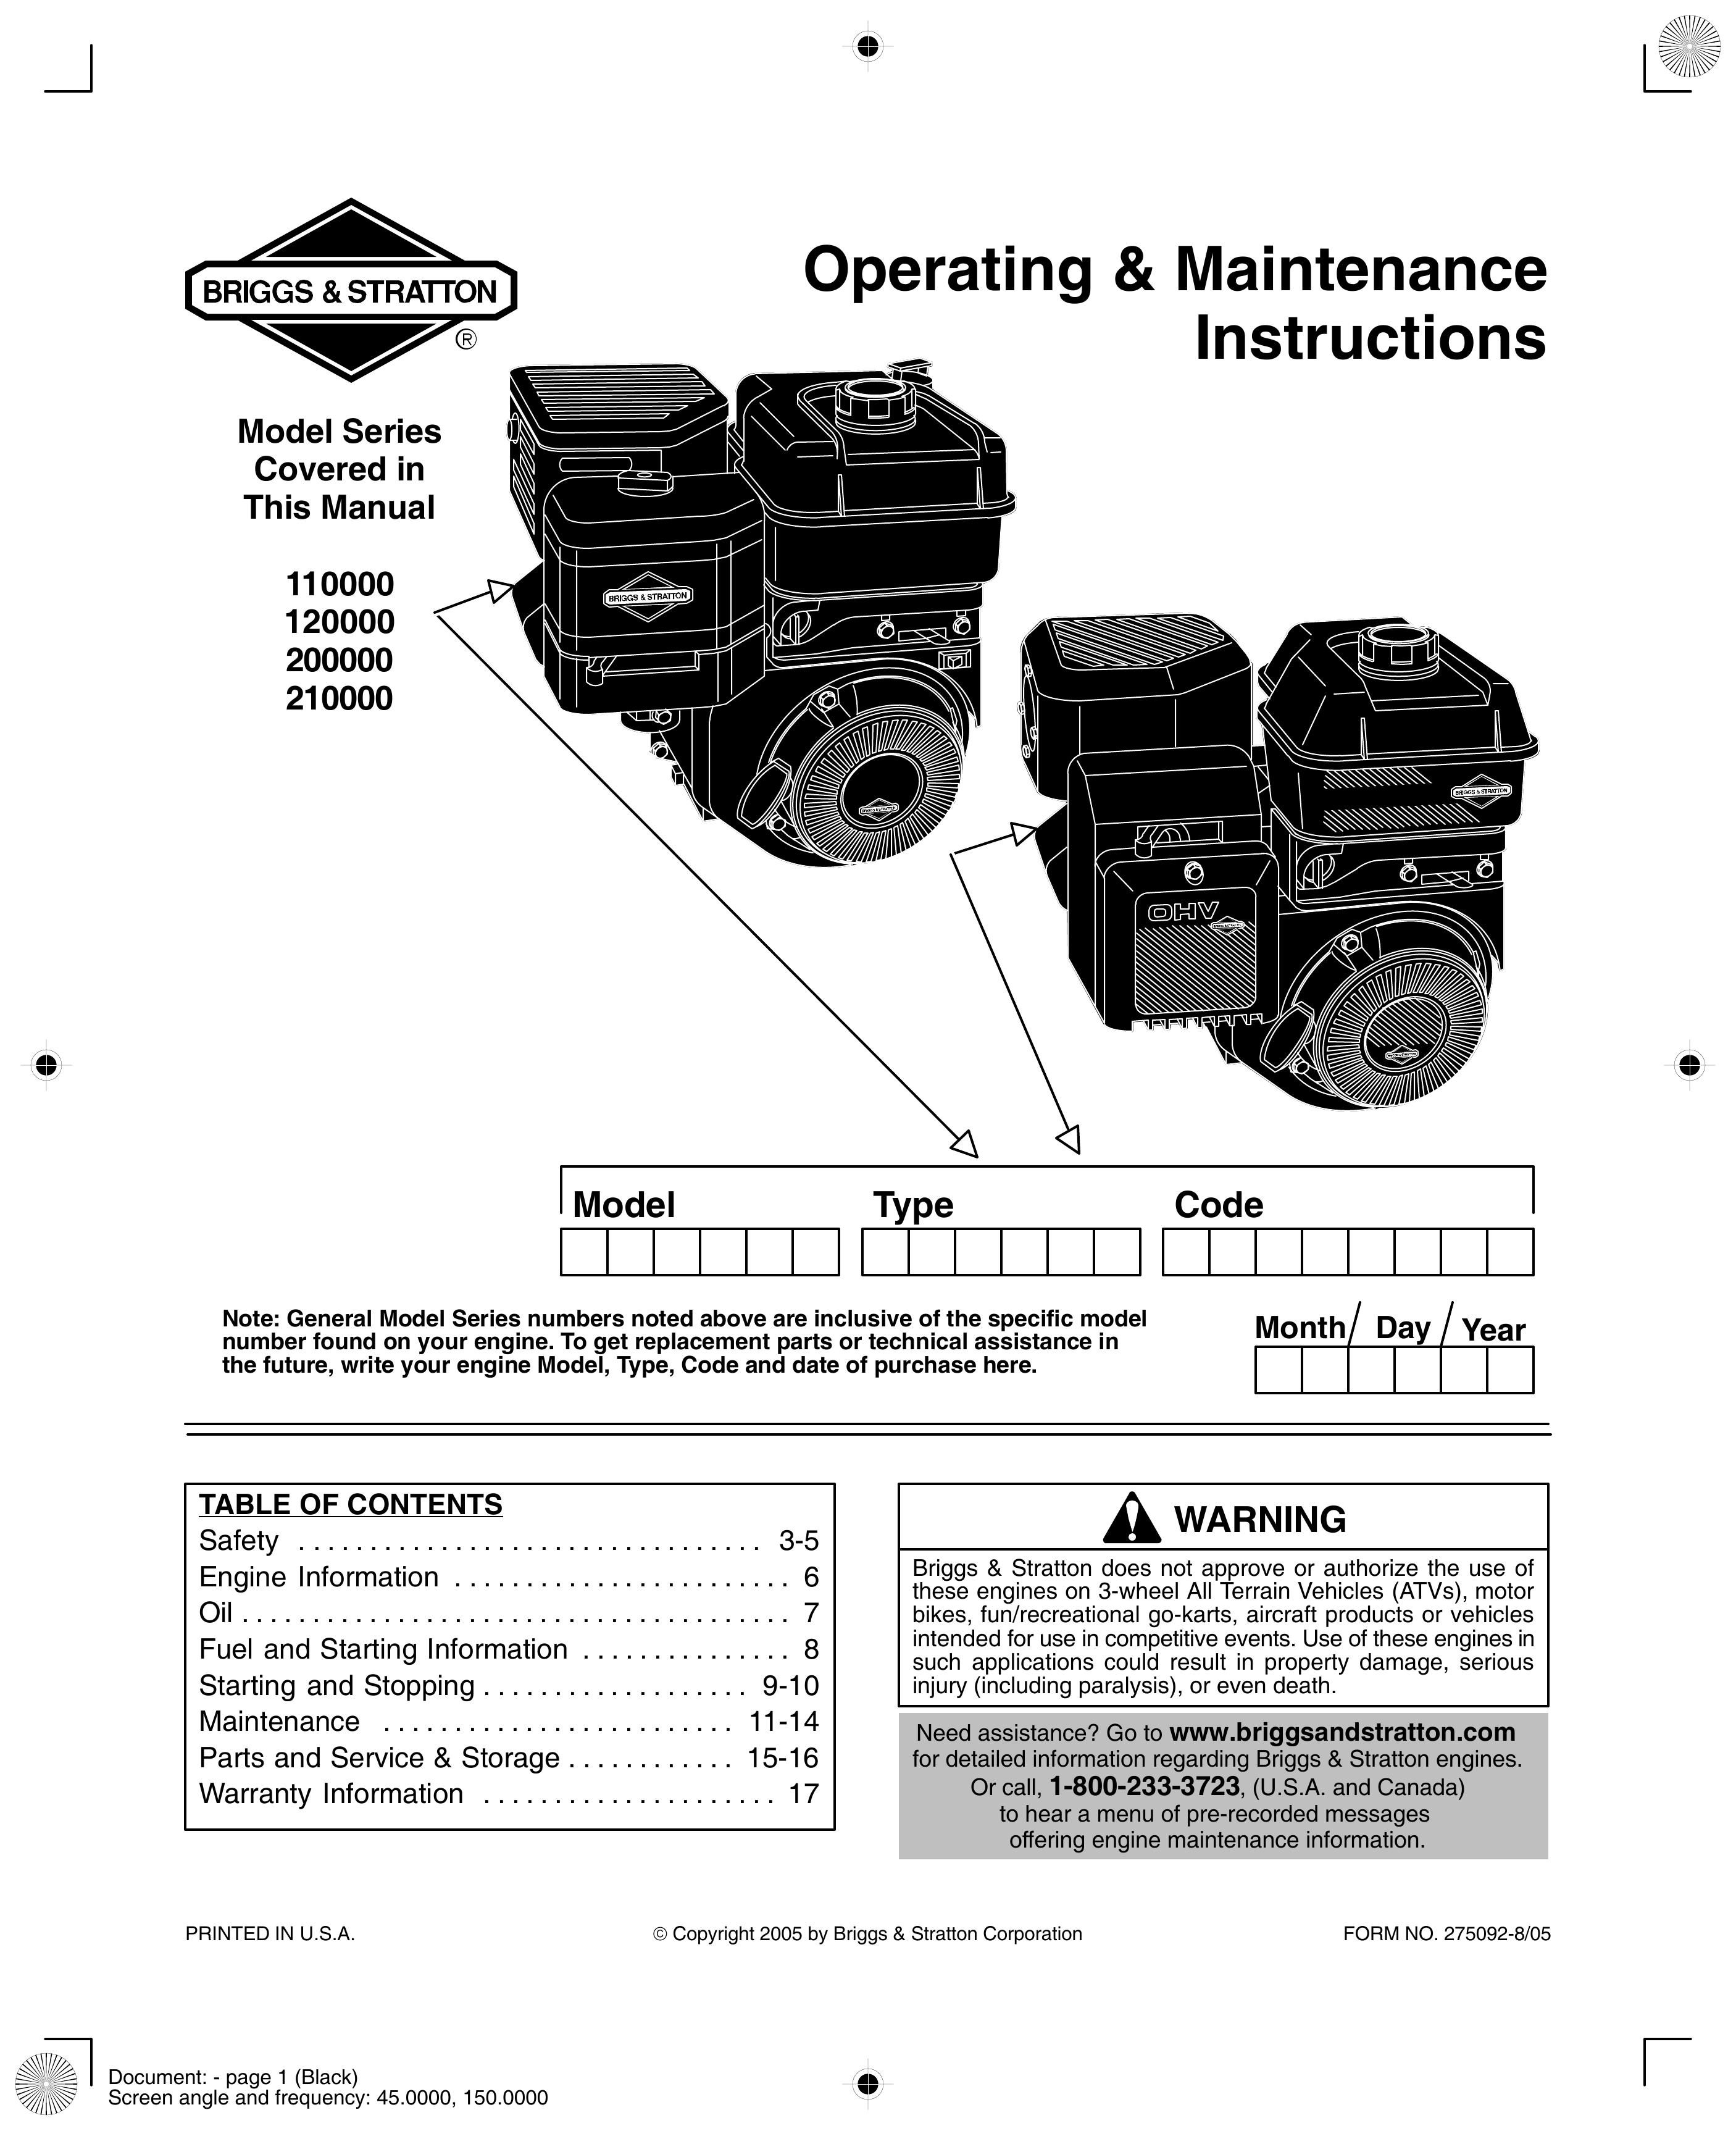 Briggs & Stratton 110000 Lawn Mower User Manual